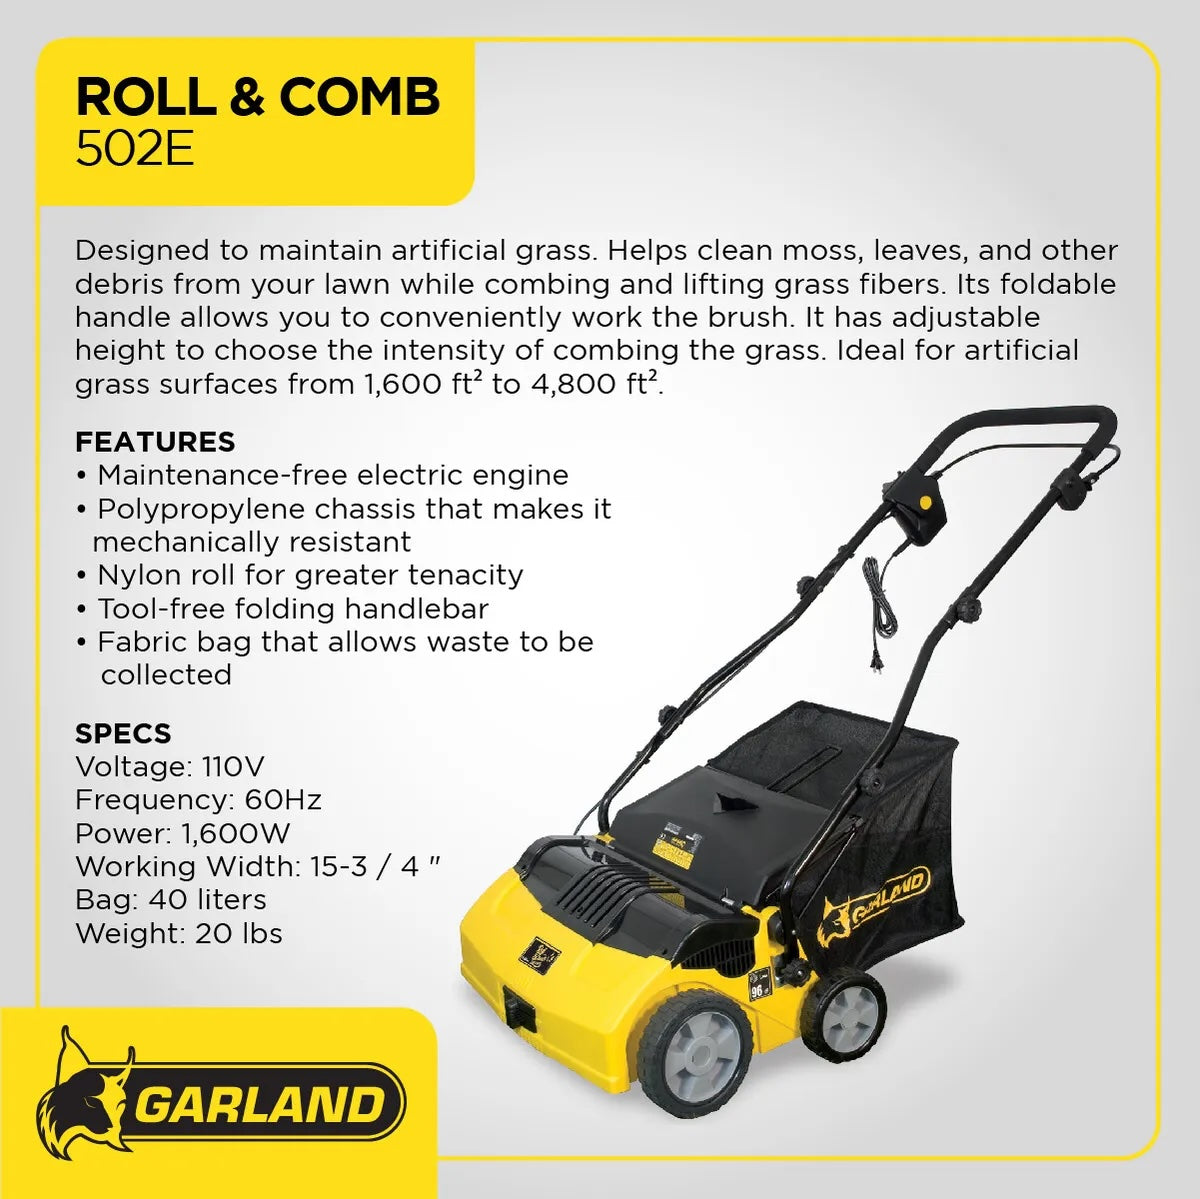 Roll & Comb 502 Sweeper